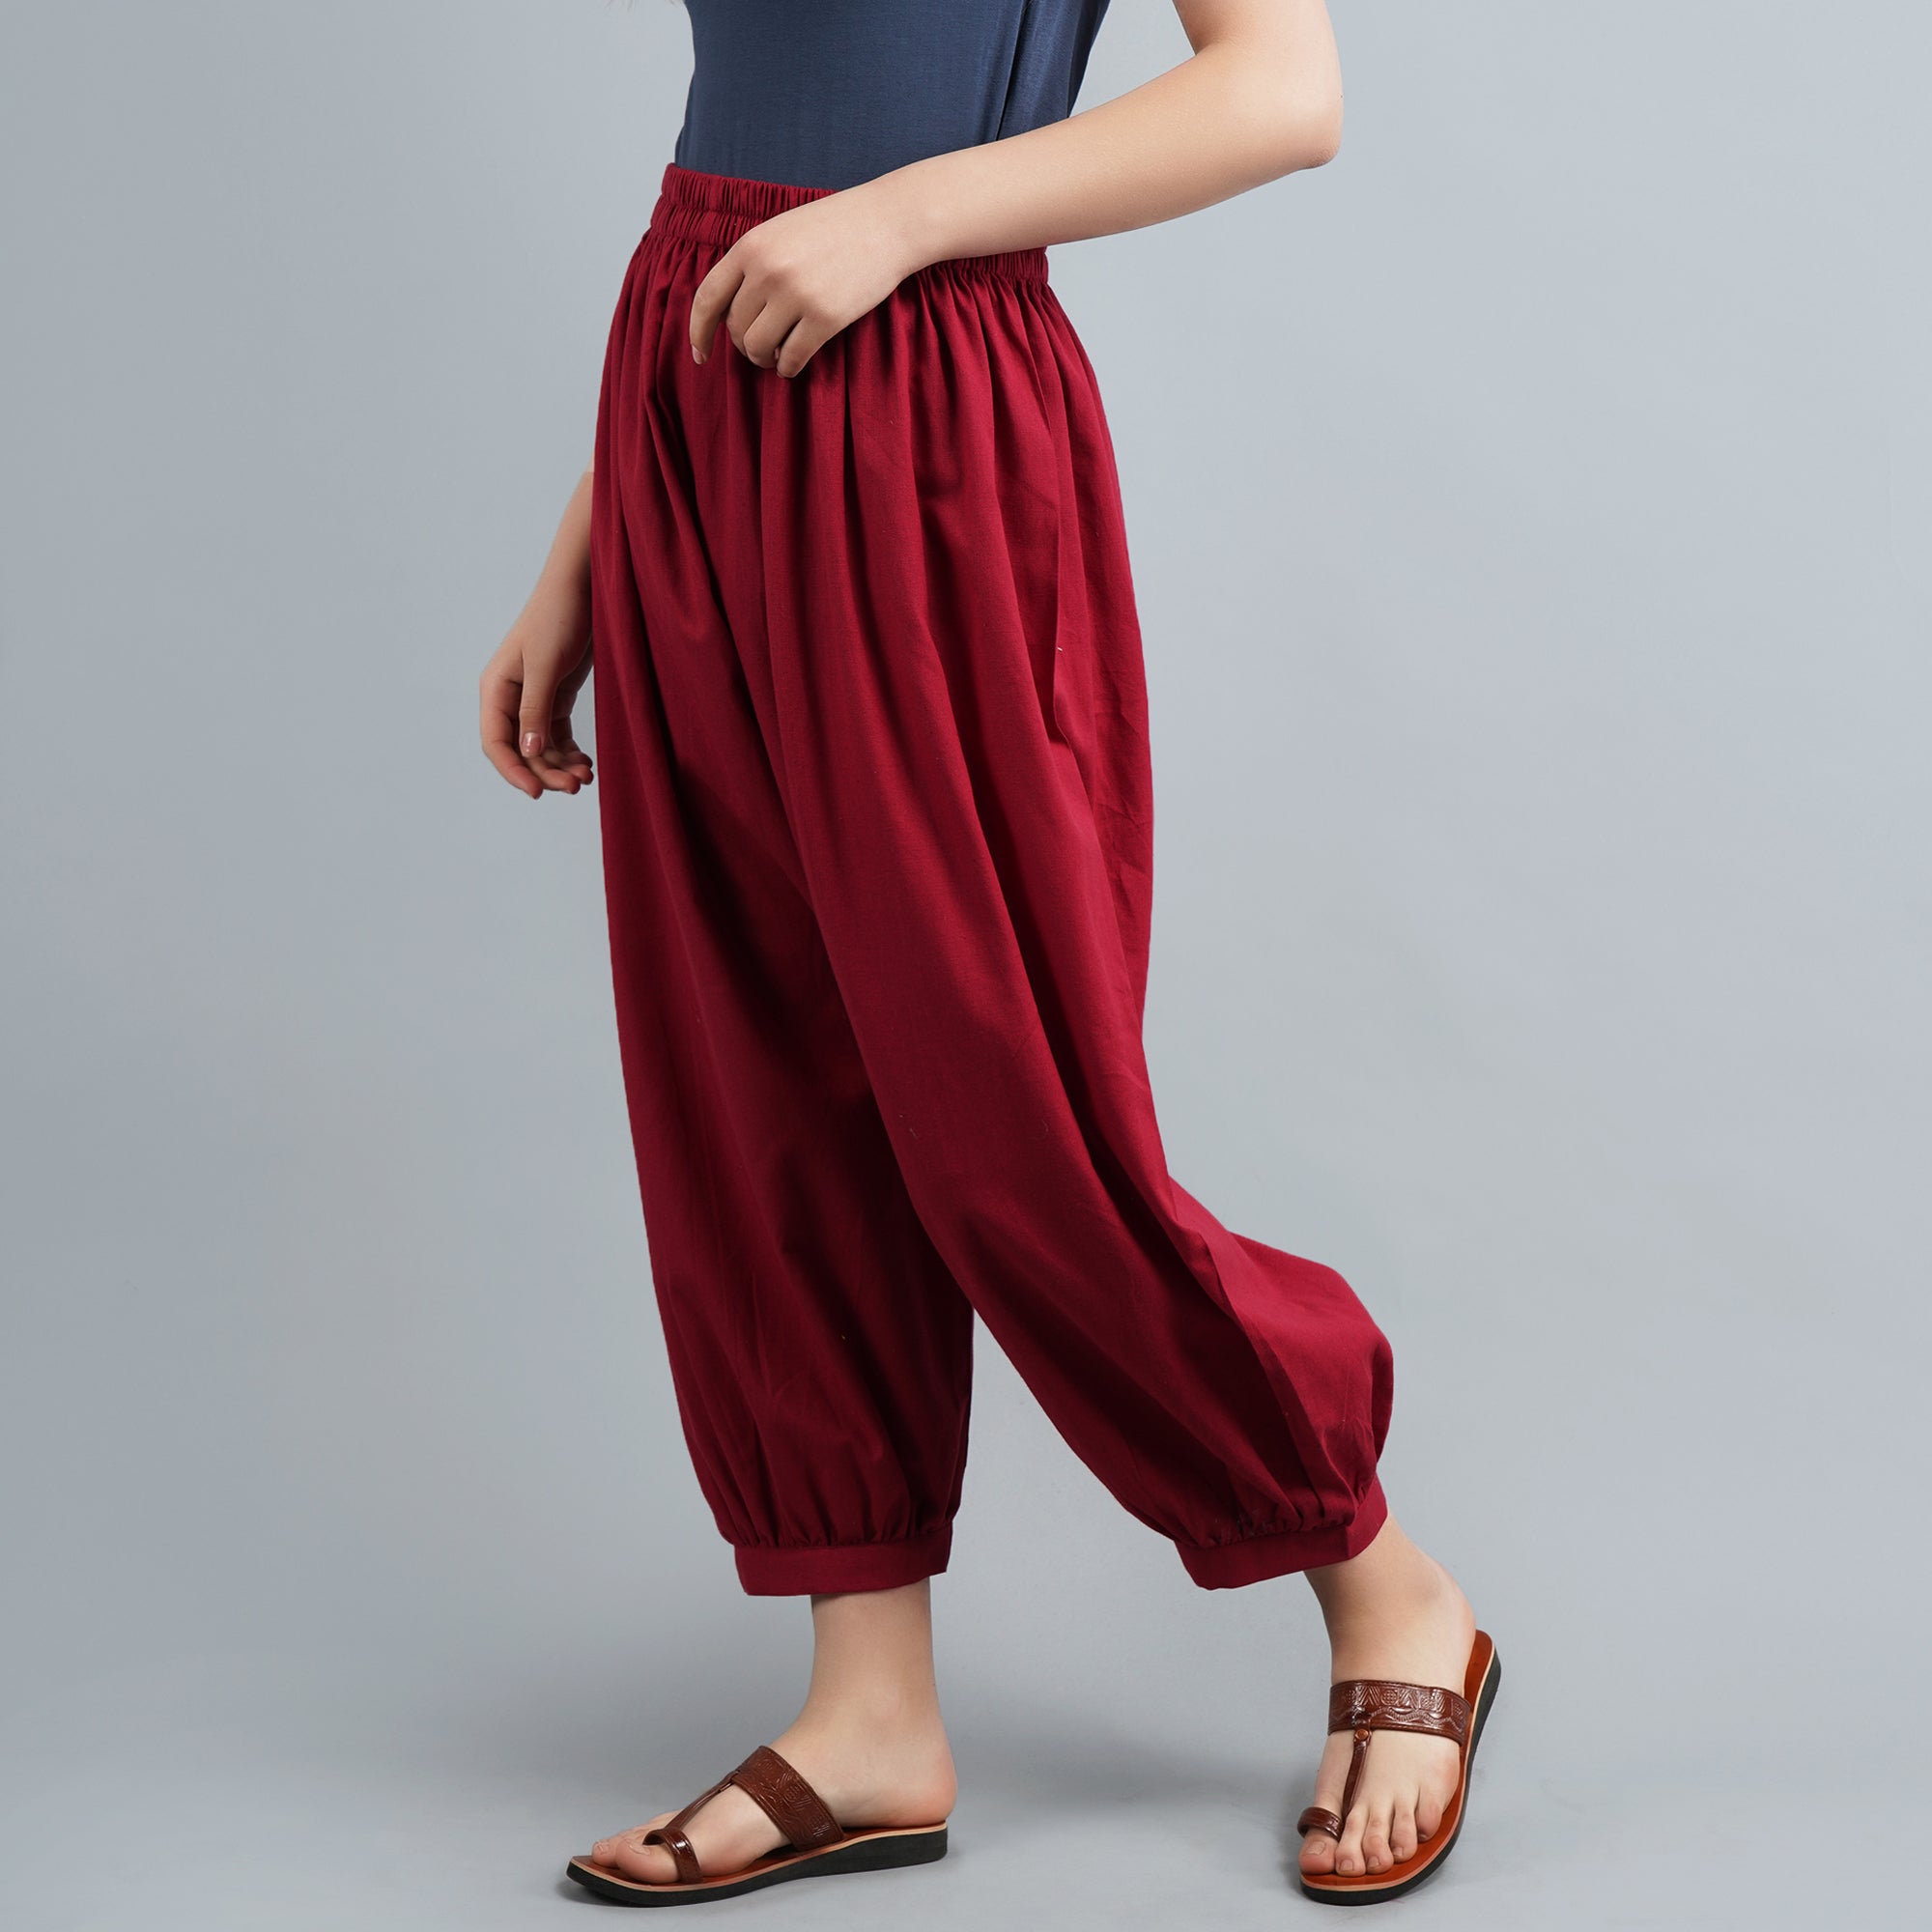 Buy Men's Pants Online | Custom Tailored Pants - StudioSuits